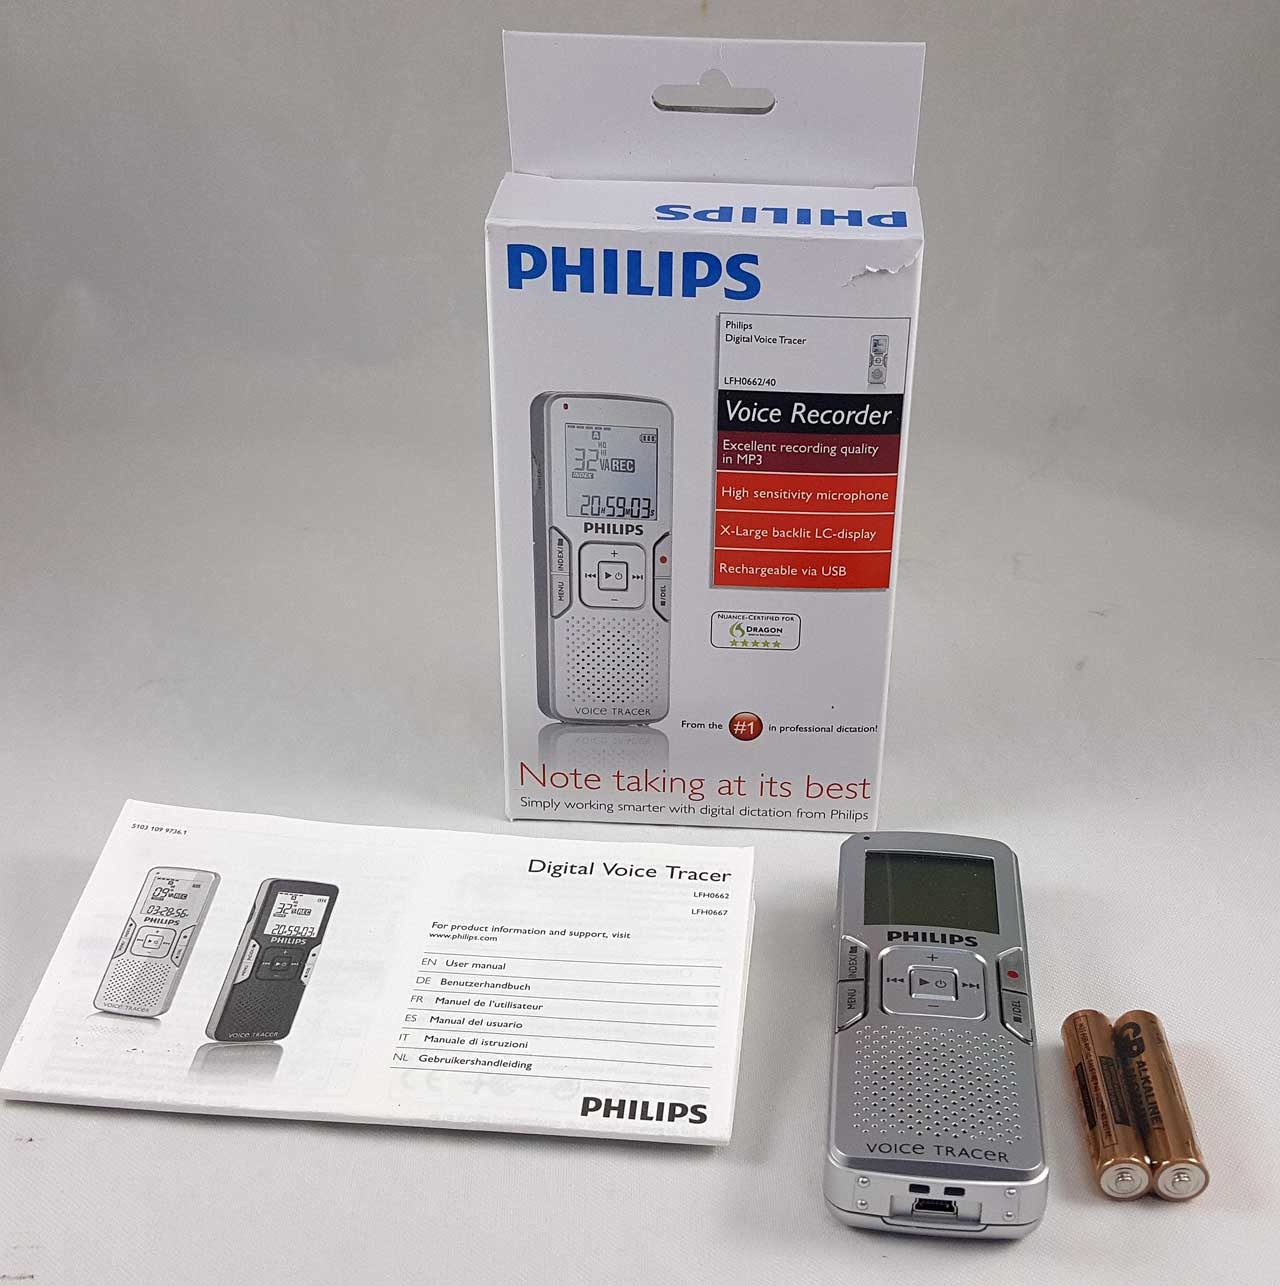 Philips Voice Recorder Digital Voice Tracer Lfh066240 Used Chrosmack Ventures Inc 7336